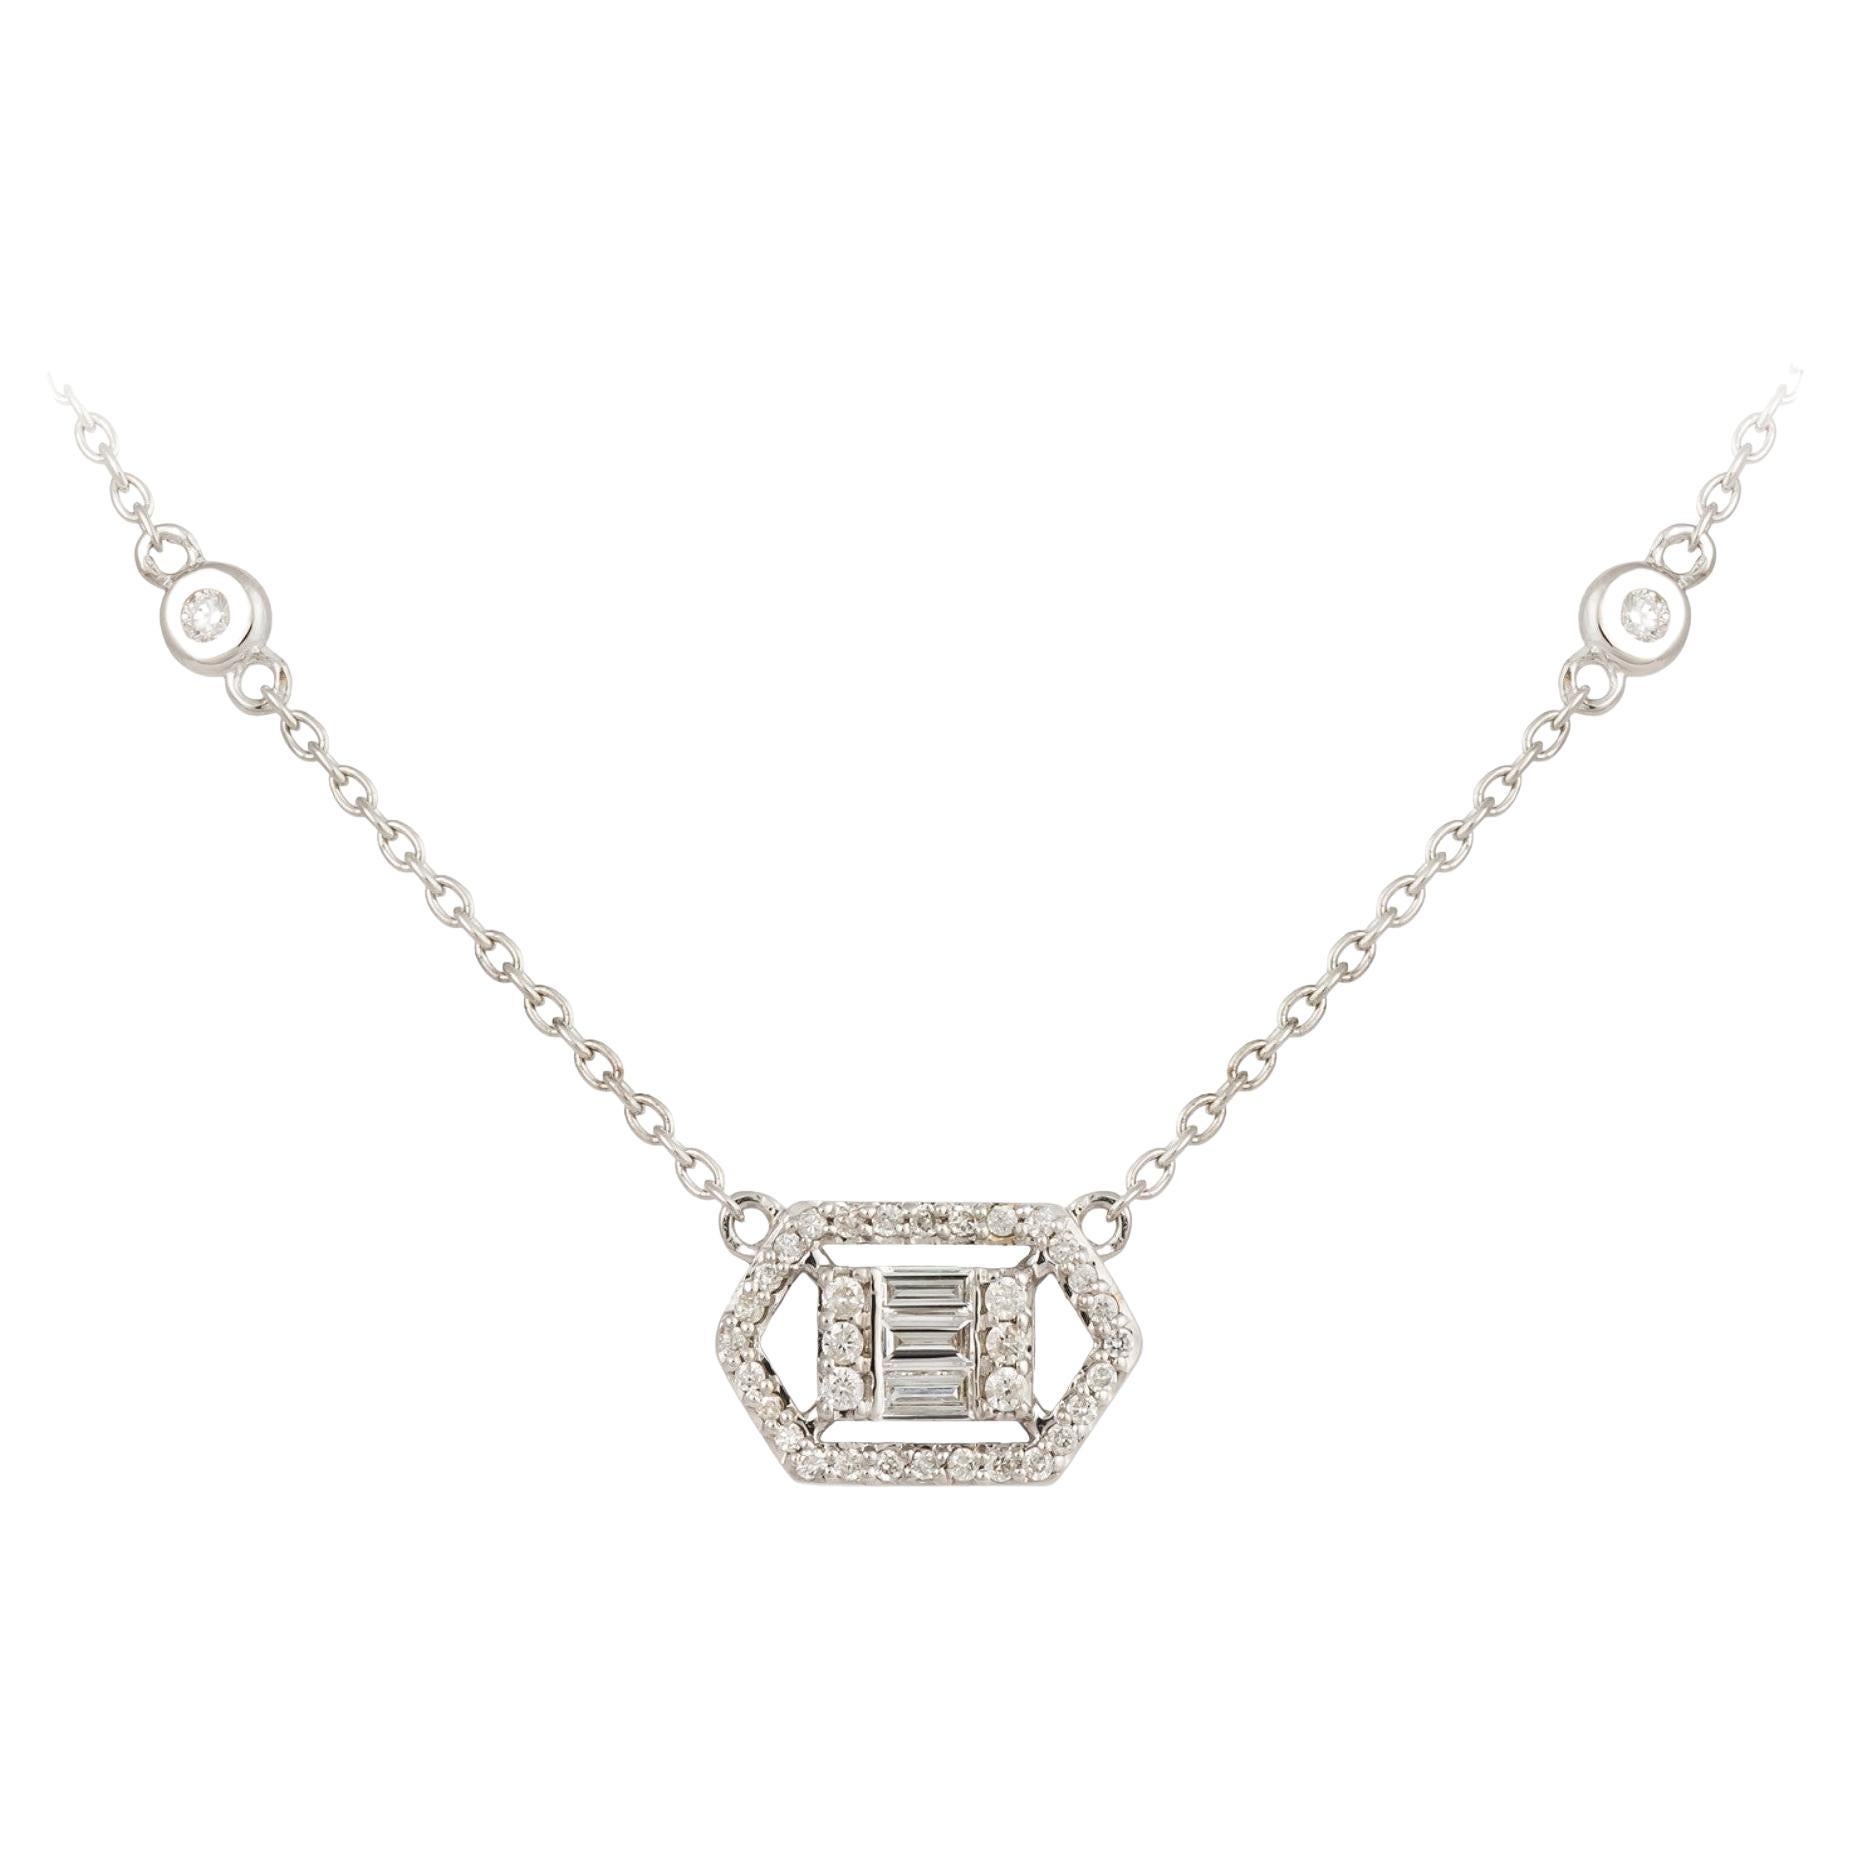 NWT $2, 575 Rare 18KT Gold Large Fancy Diamond Solitaire Pendant Necklace For Sale